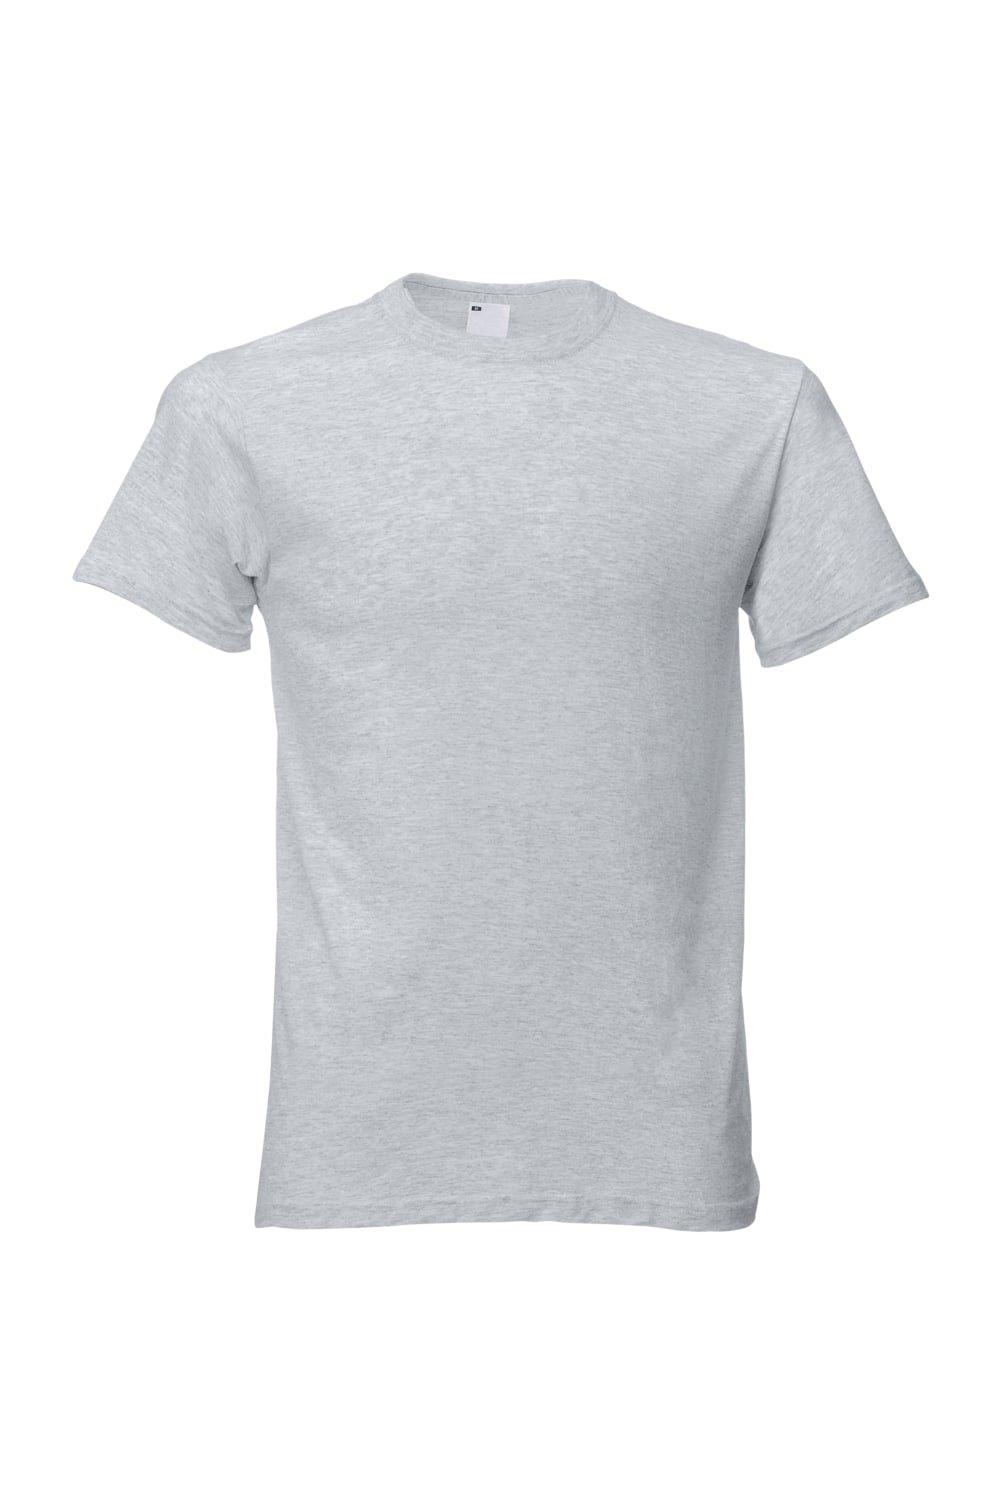 цена Повседневная футболка с коротким рукавом Universal Textiles, серый